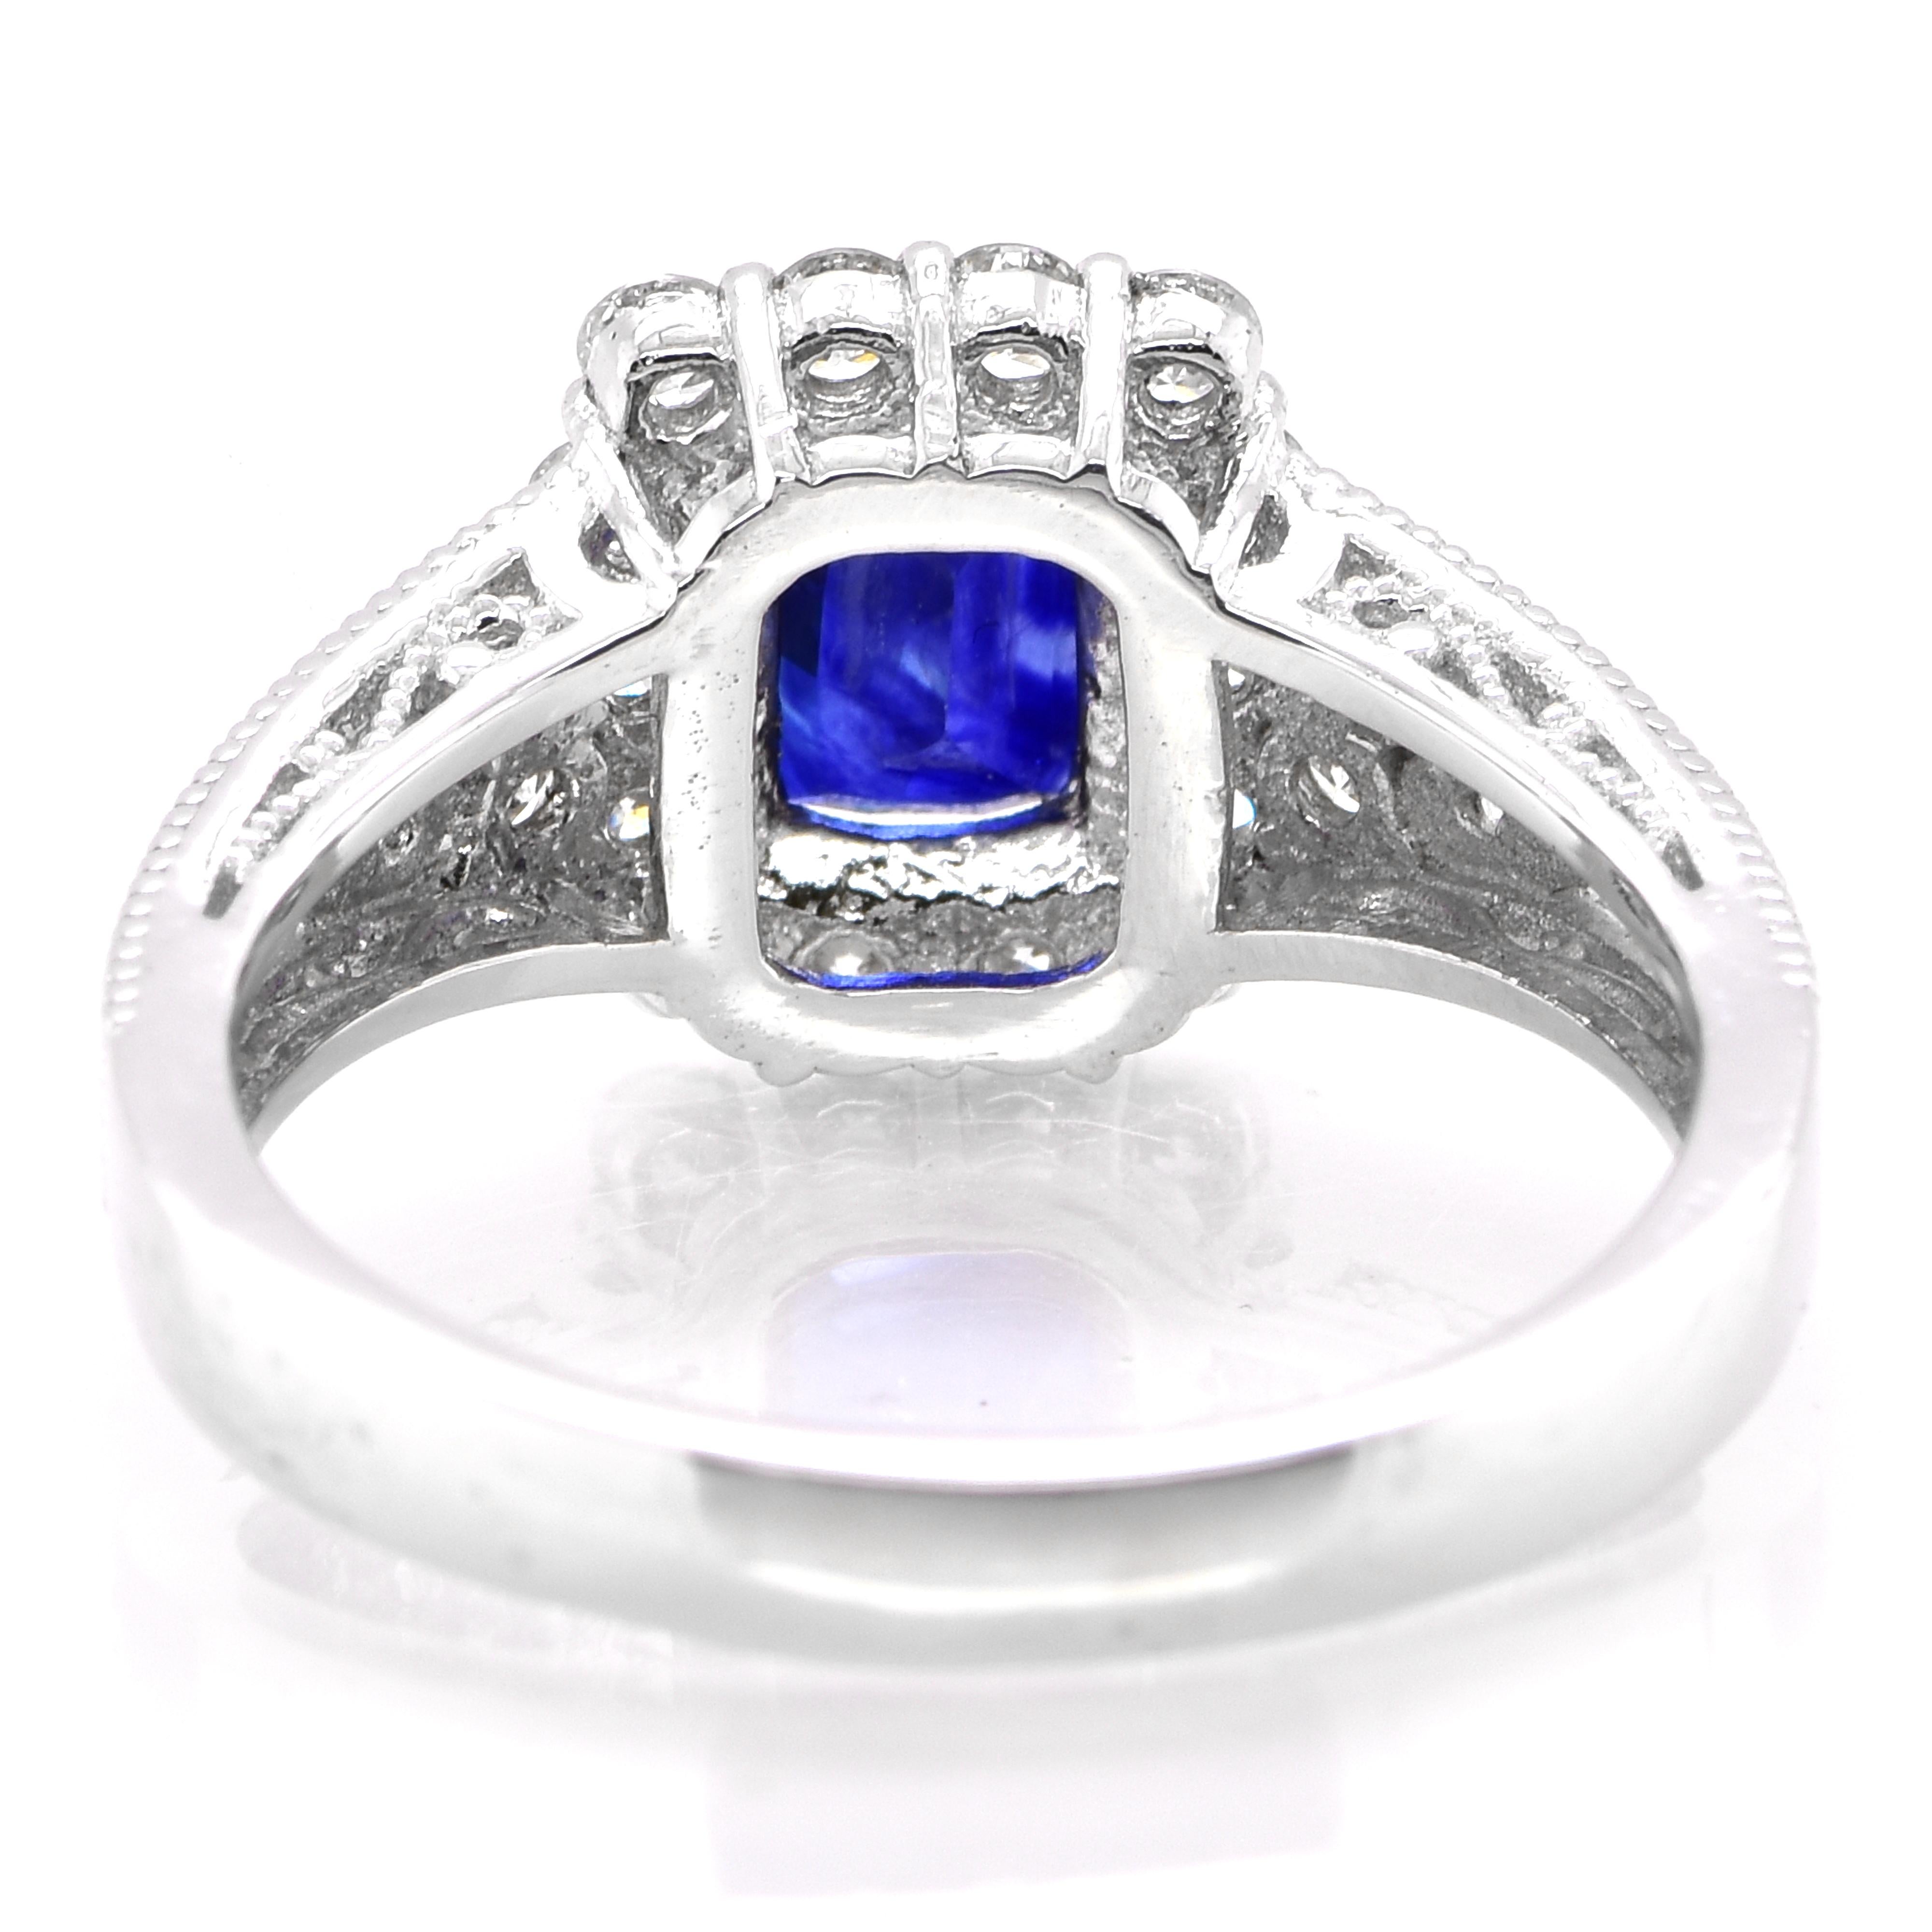 Women's 1.24 Carat Natural Royal Blue Sapphire & Diamond Ring set in Platinum For Sale